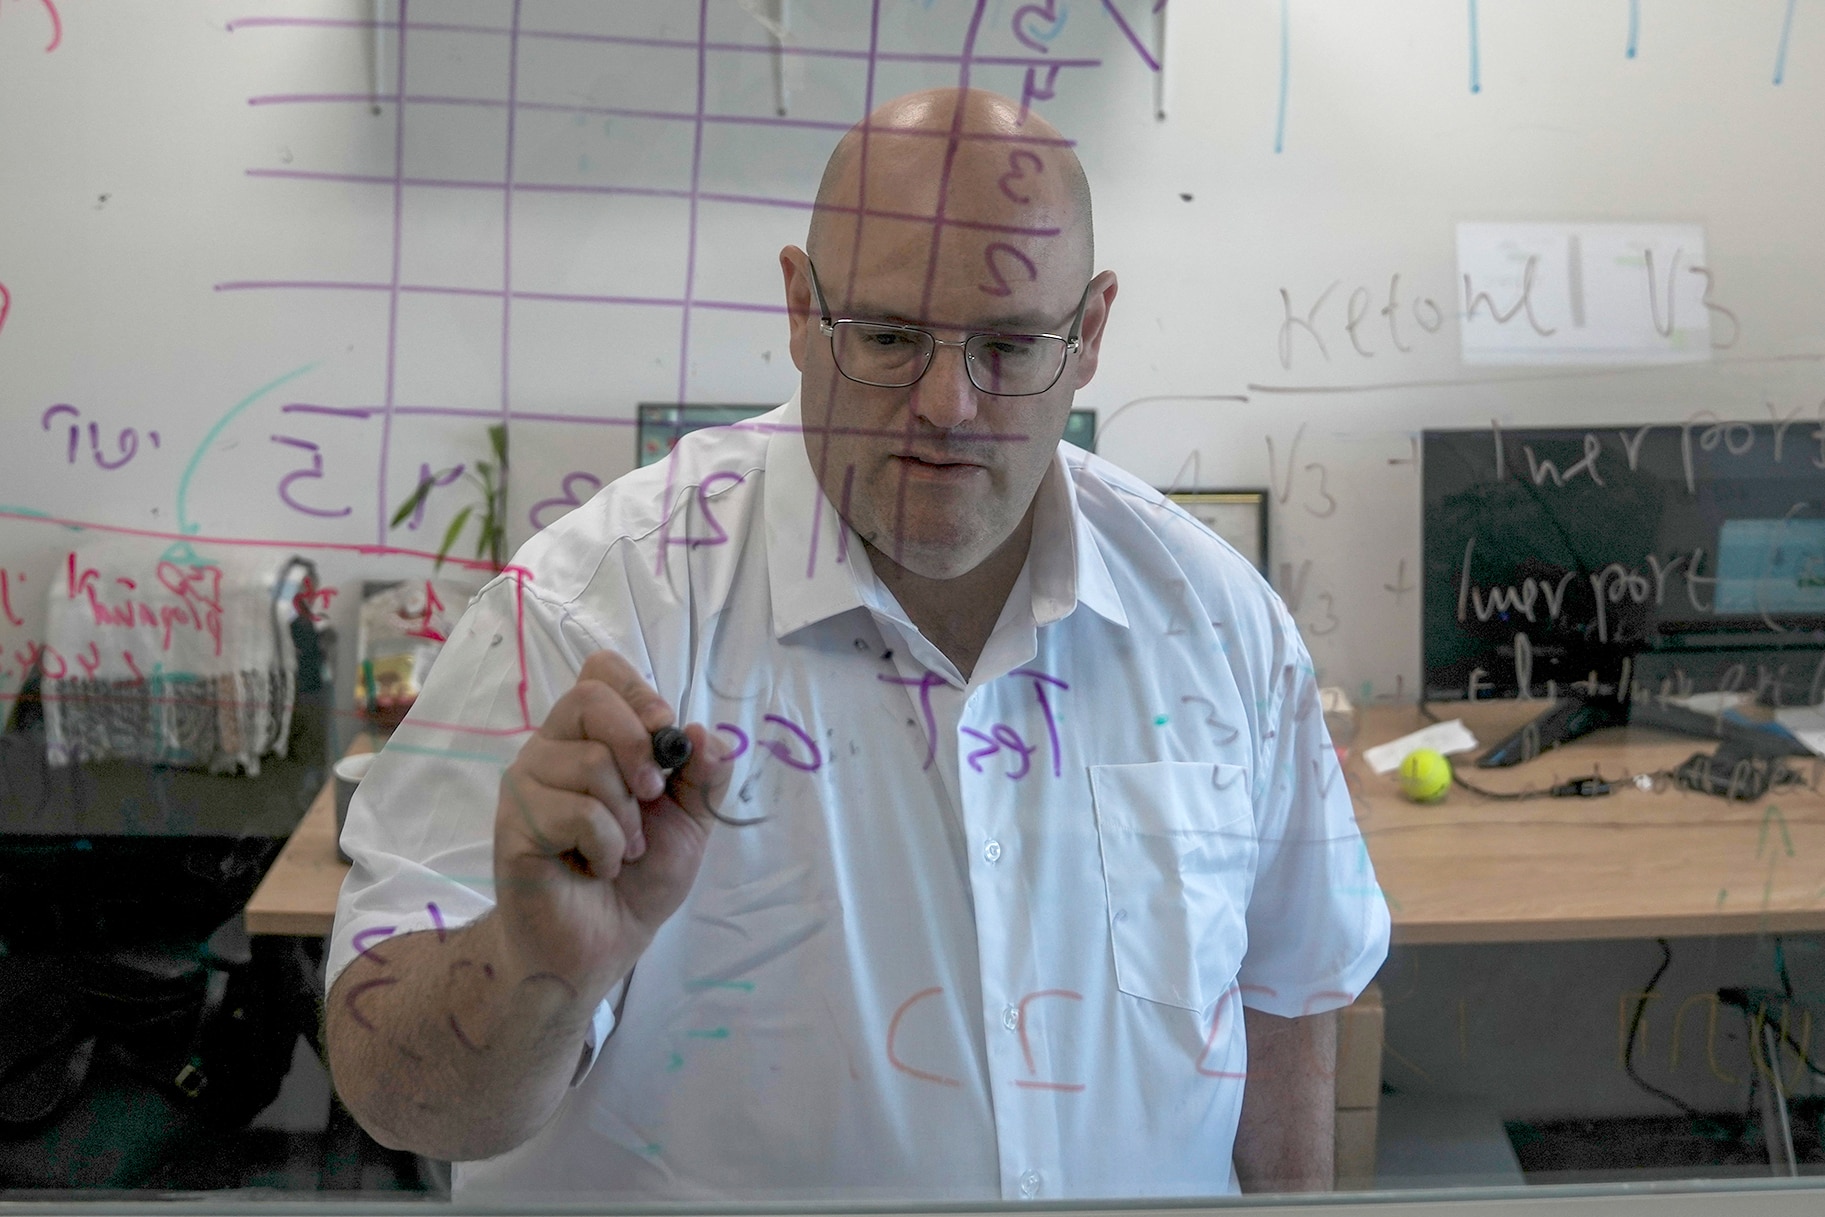 Harel Hershtik works at his lab in Israel